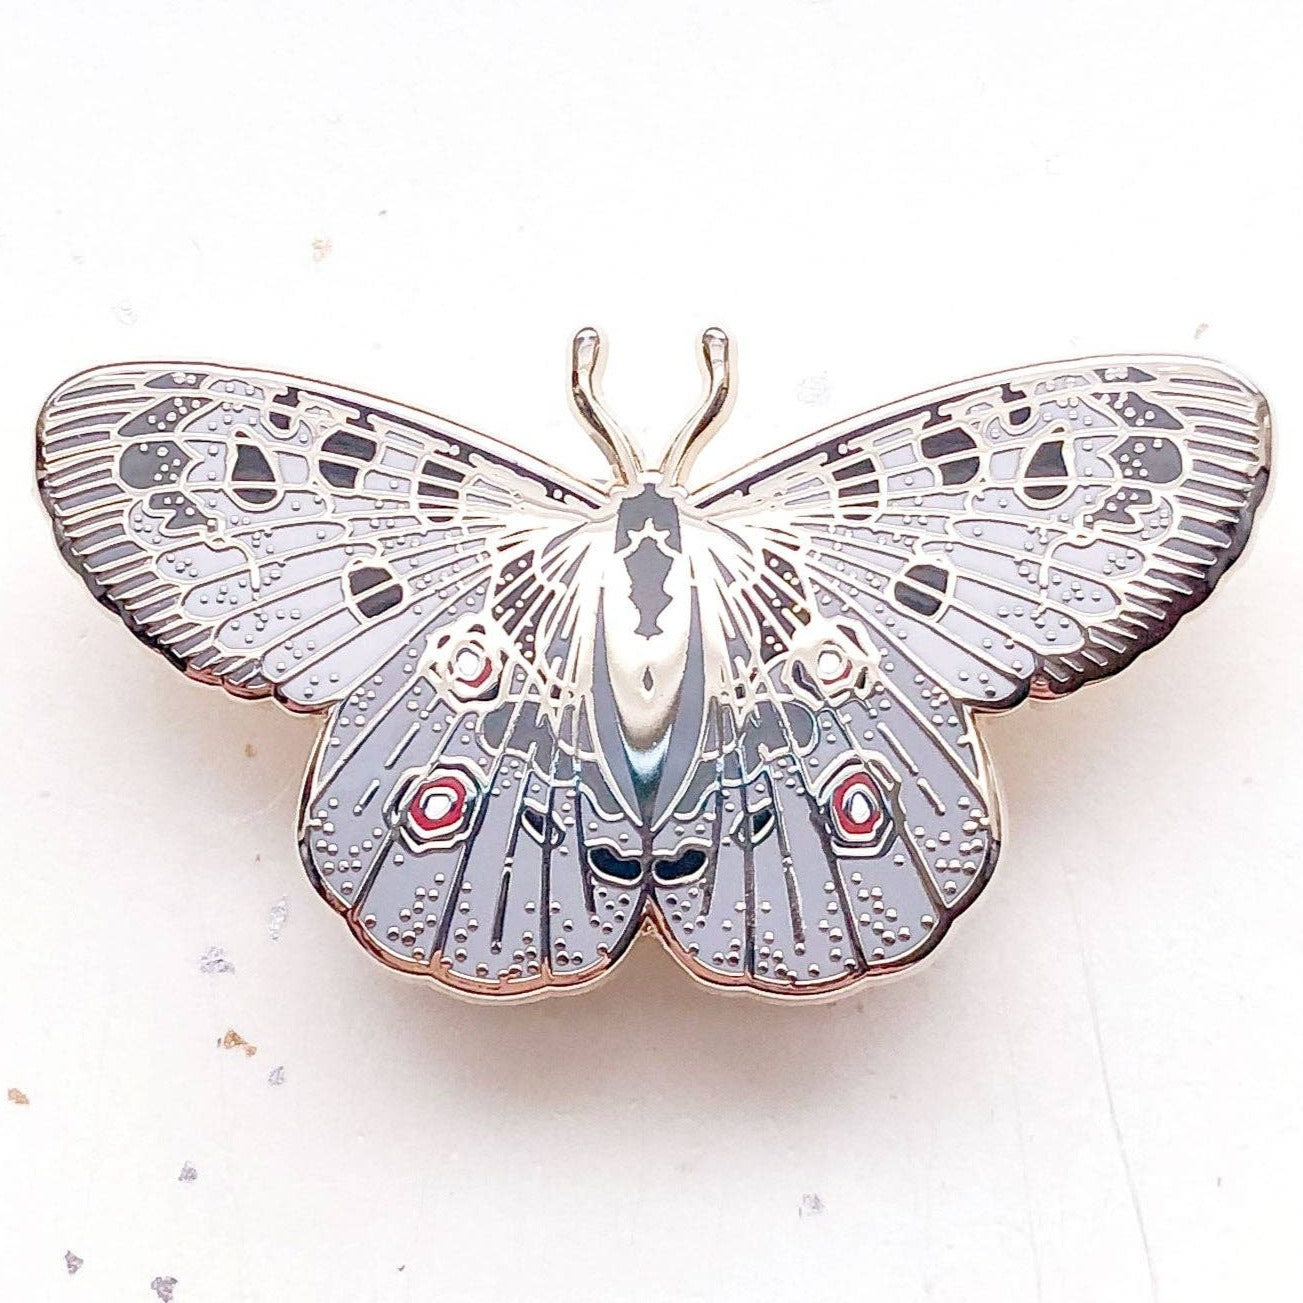 Mountain Apollo Butterfly (Parnassius apollo) Enamel Pin - Space Camp